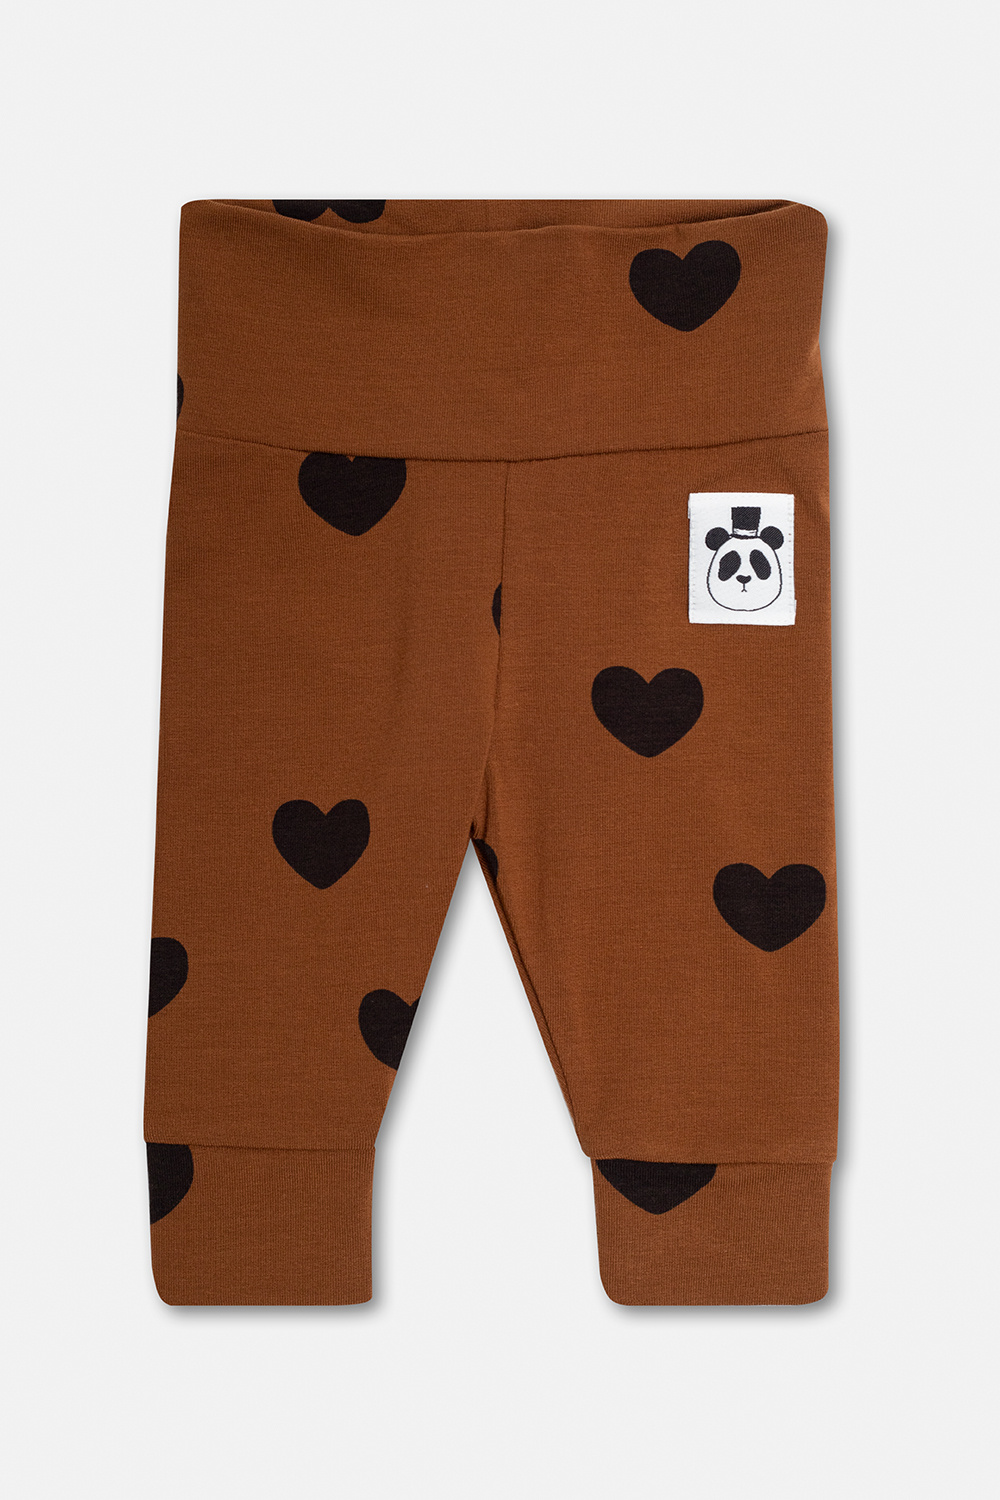 Mini Rodini trousers Brown with hearts print